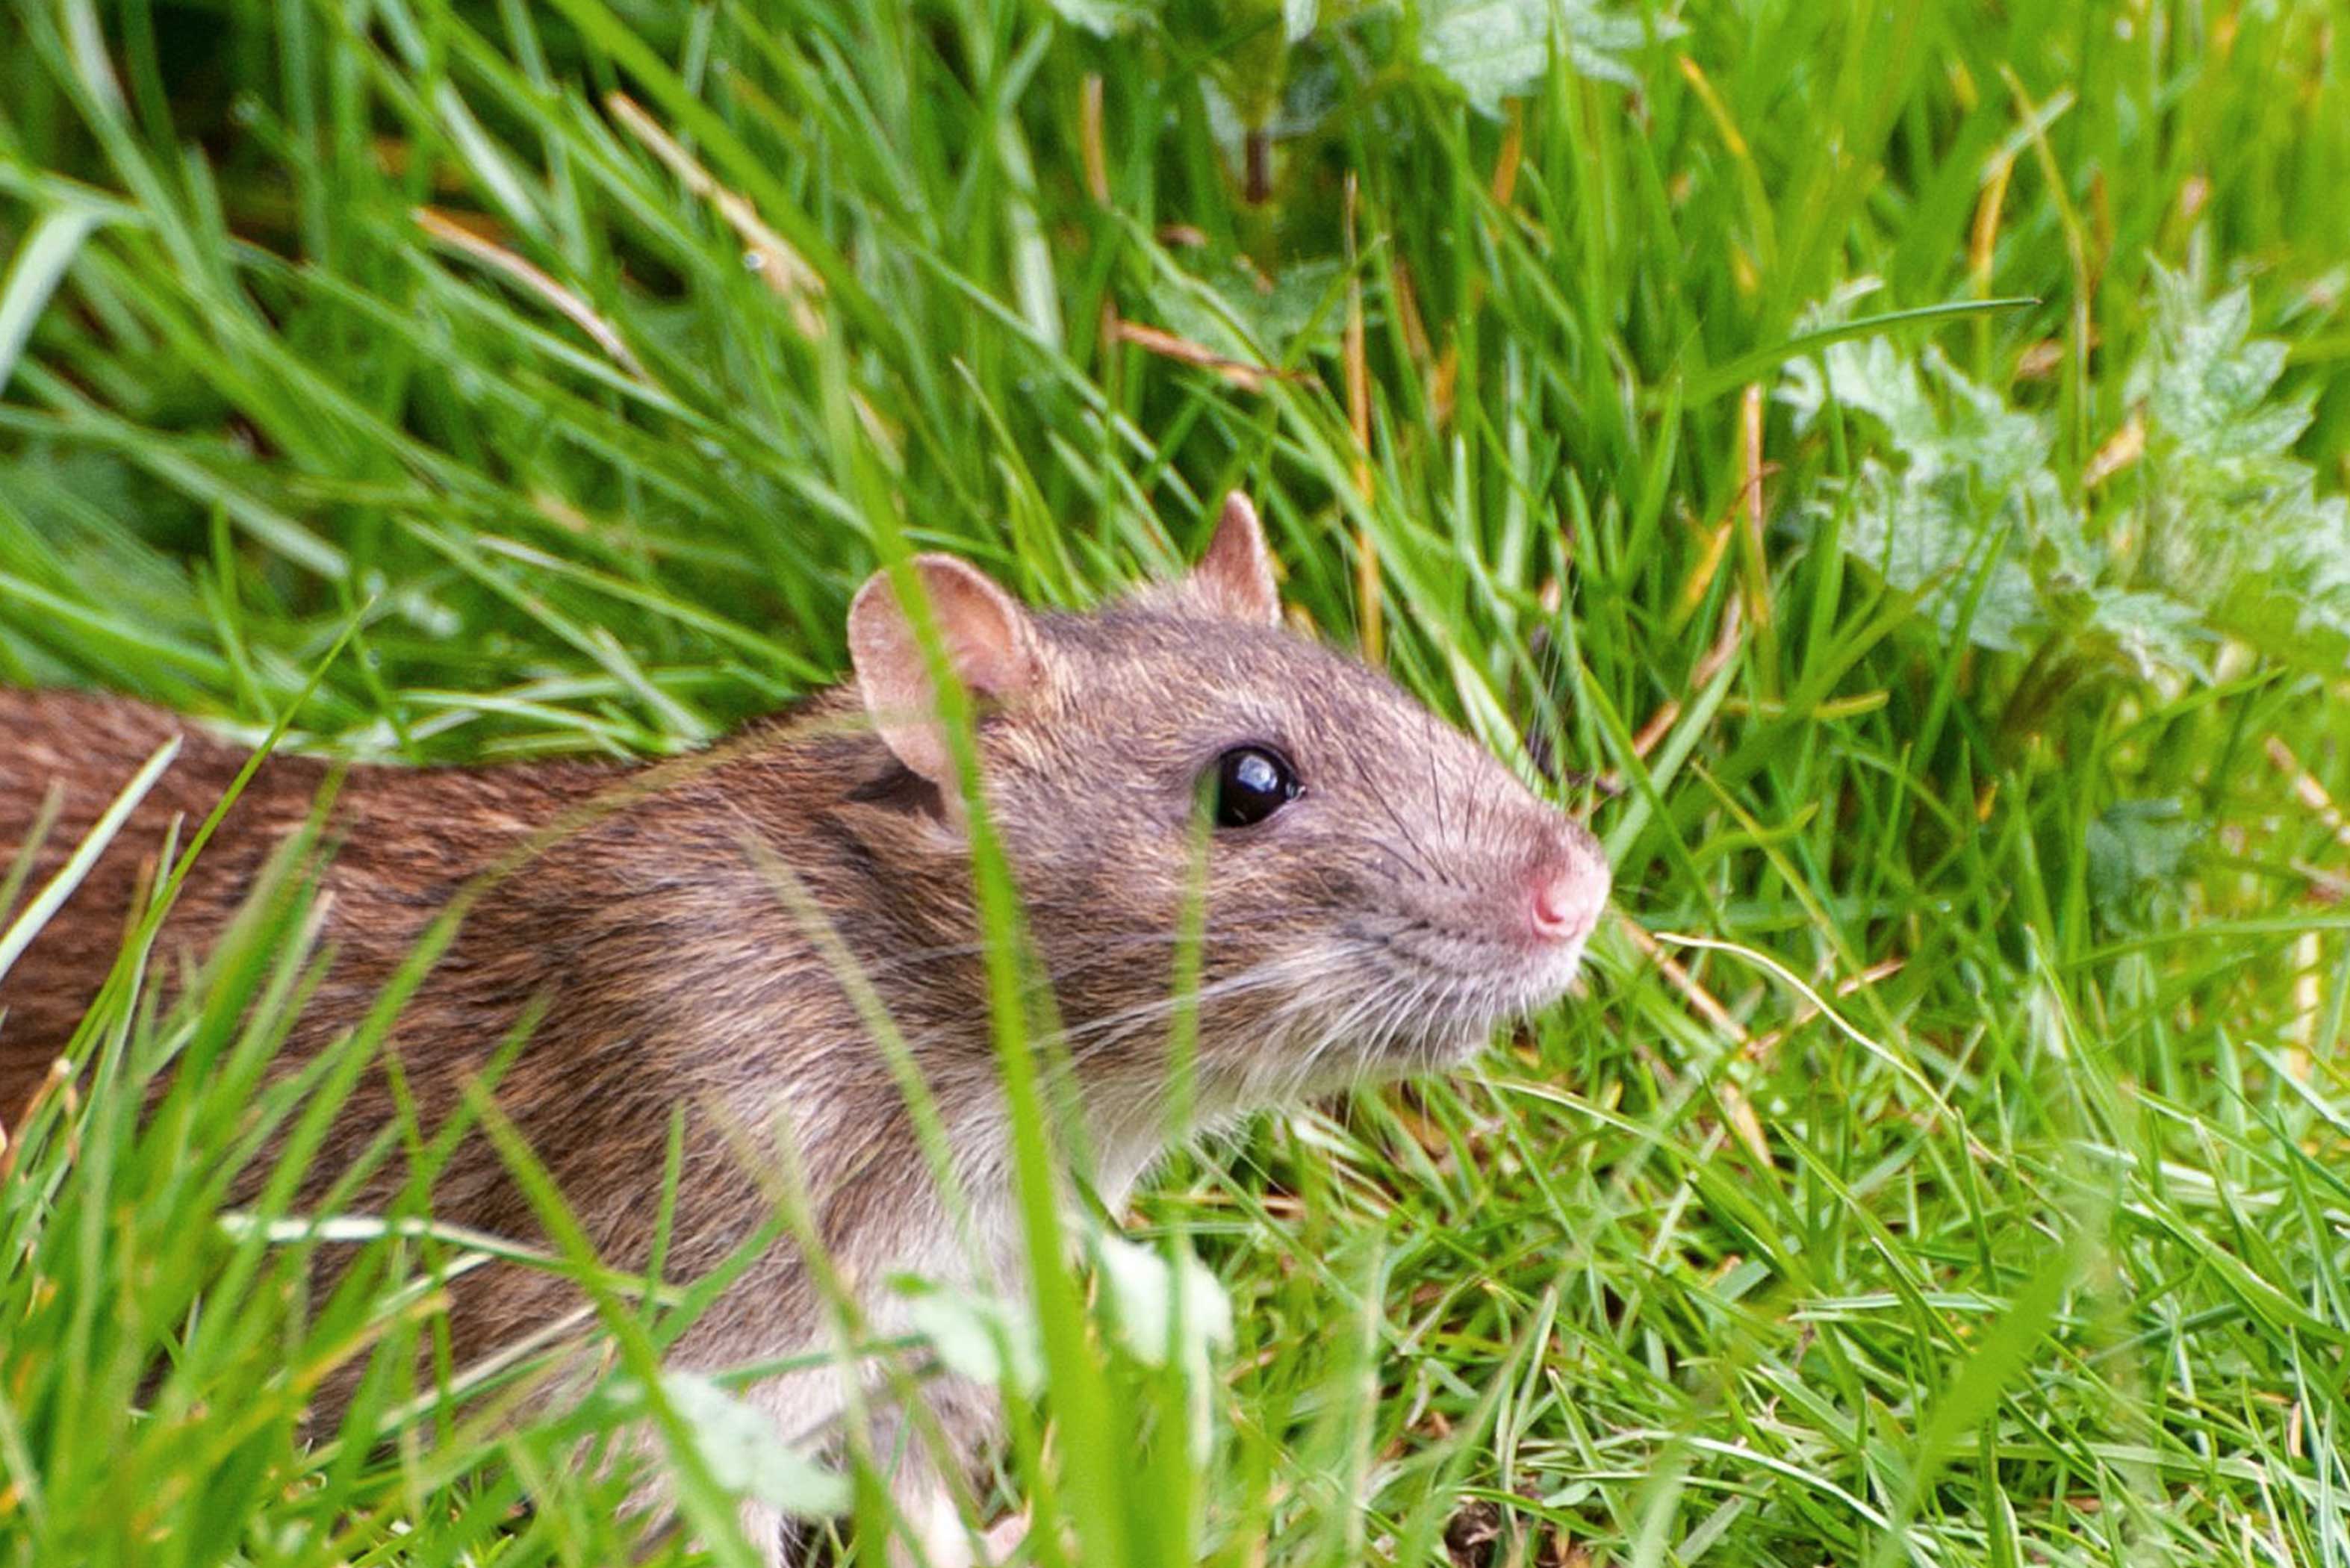 Understanding NZ’s Rats to Better Combat Them